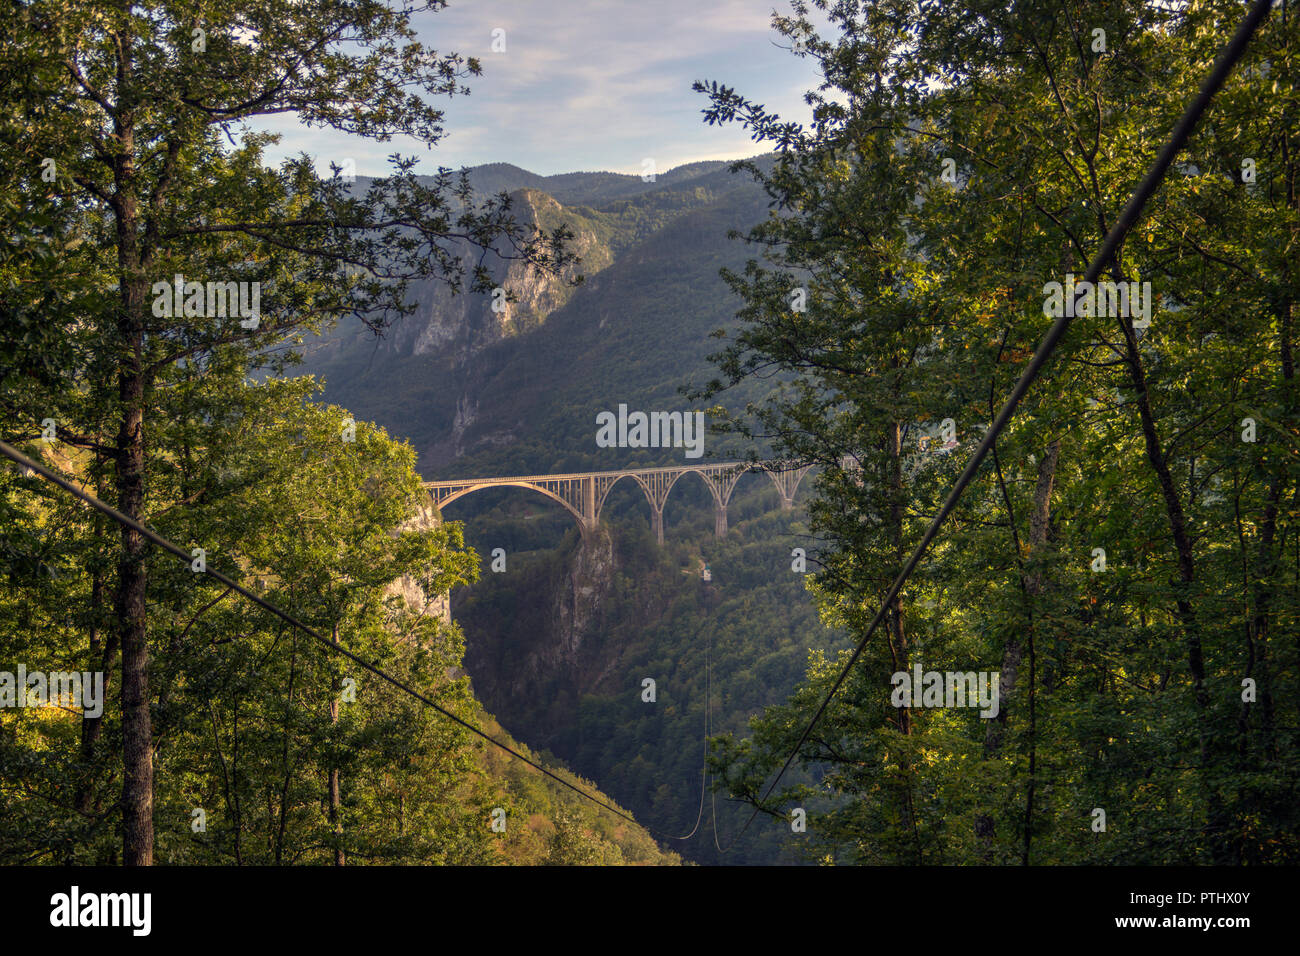 Nationalpark Durmitor, Montenegro - Djurdjevica Tara, konkrete bogenförmige Brücke (1937) überspannt den Fluss Tara Canyon Stockfoto